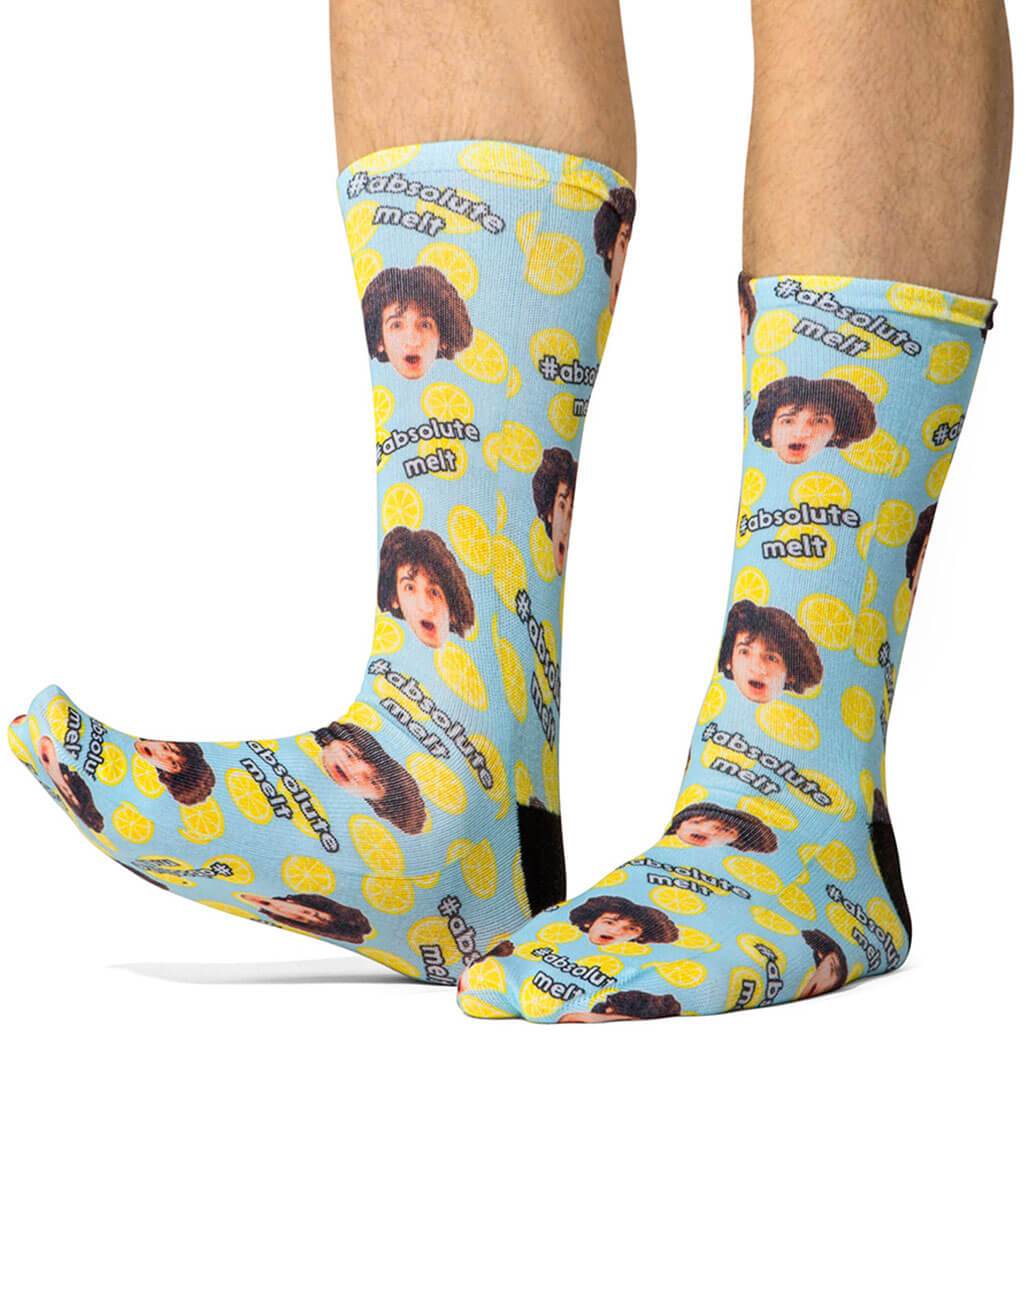 Absolute Melt Custom Socks